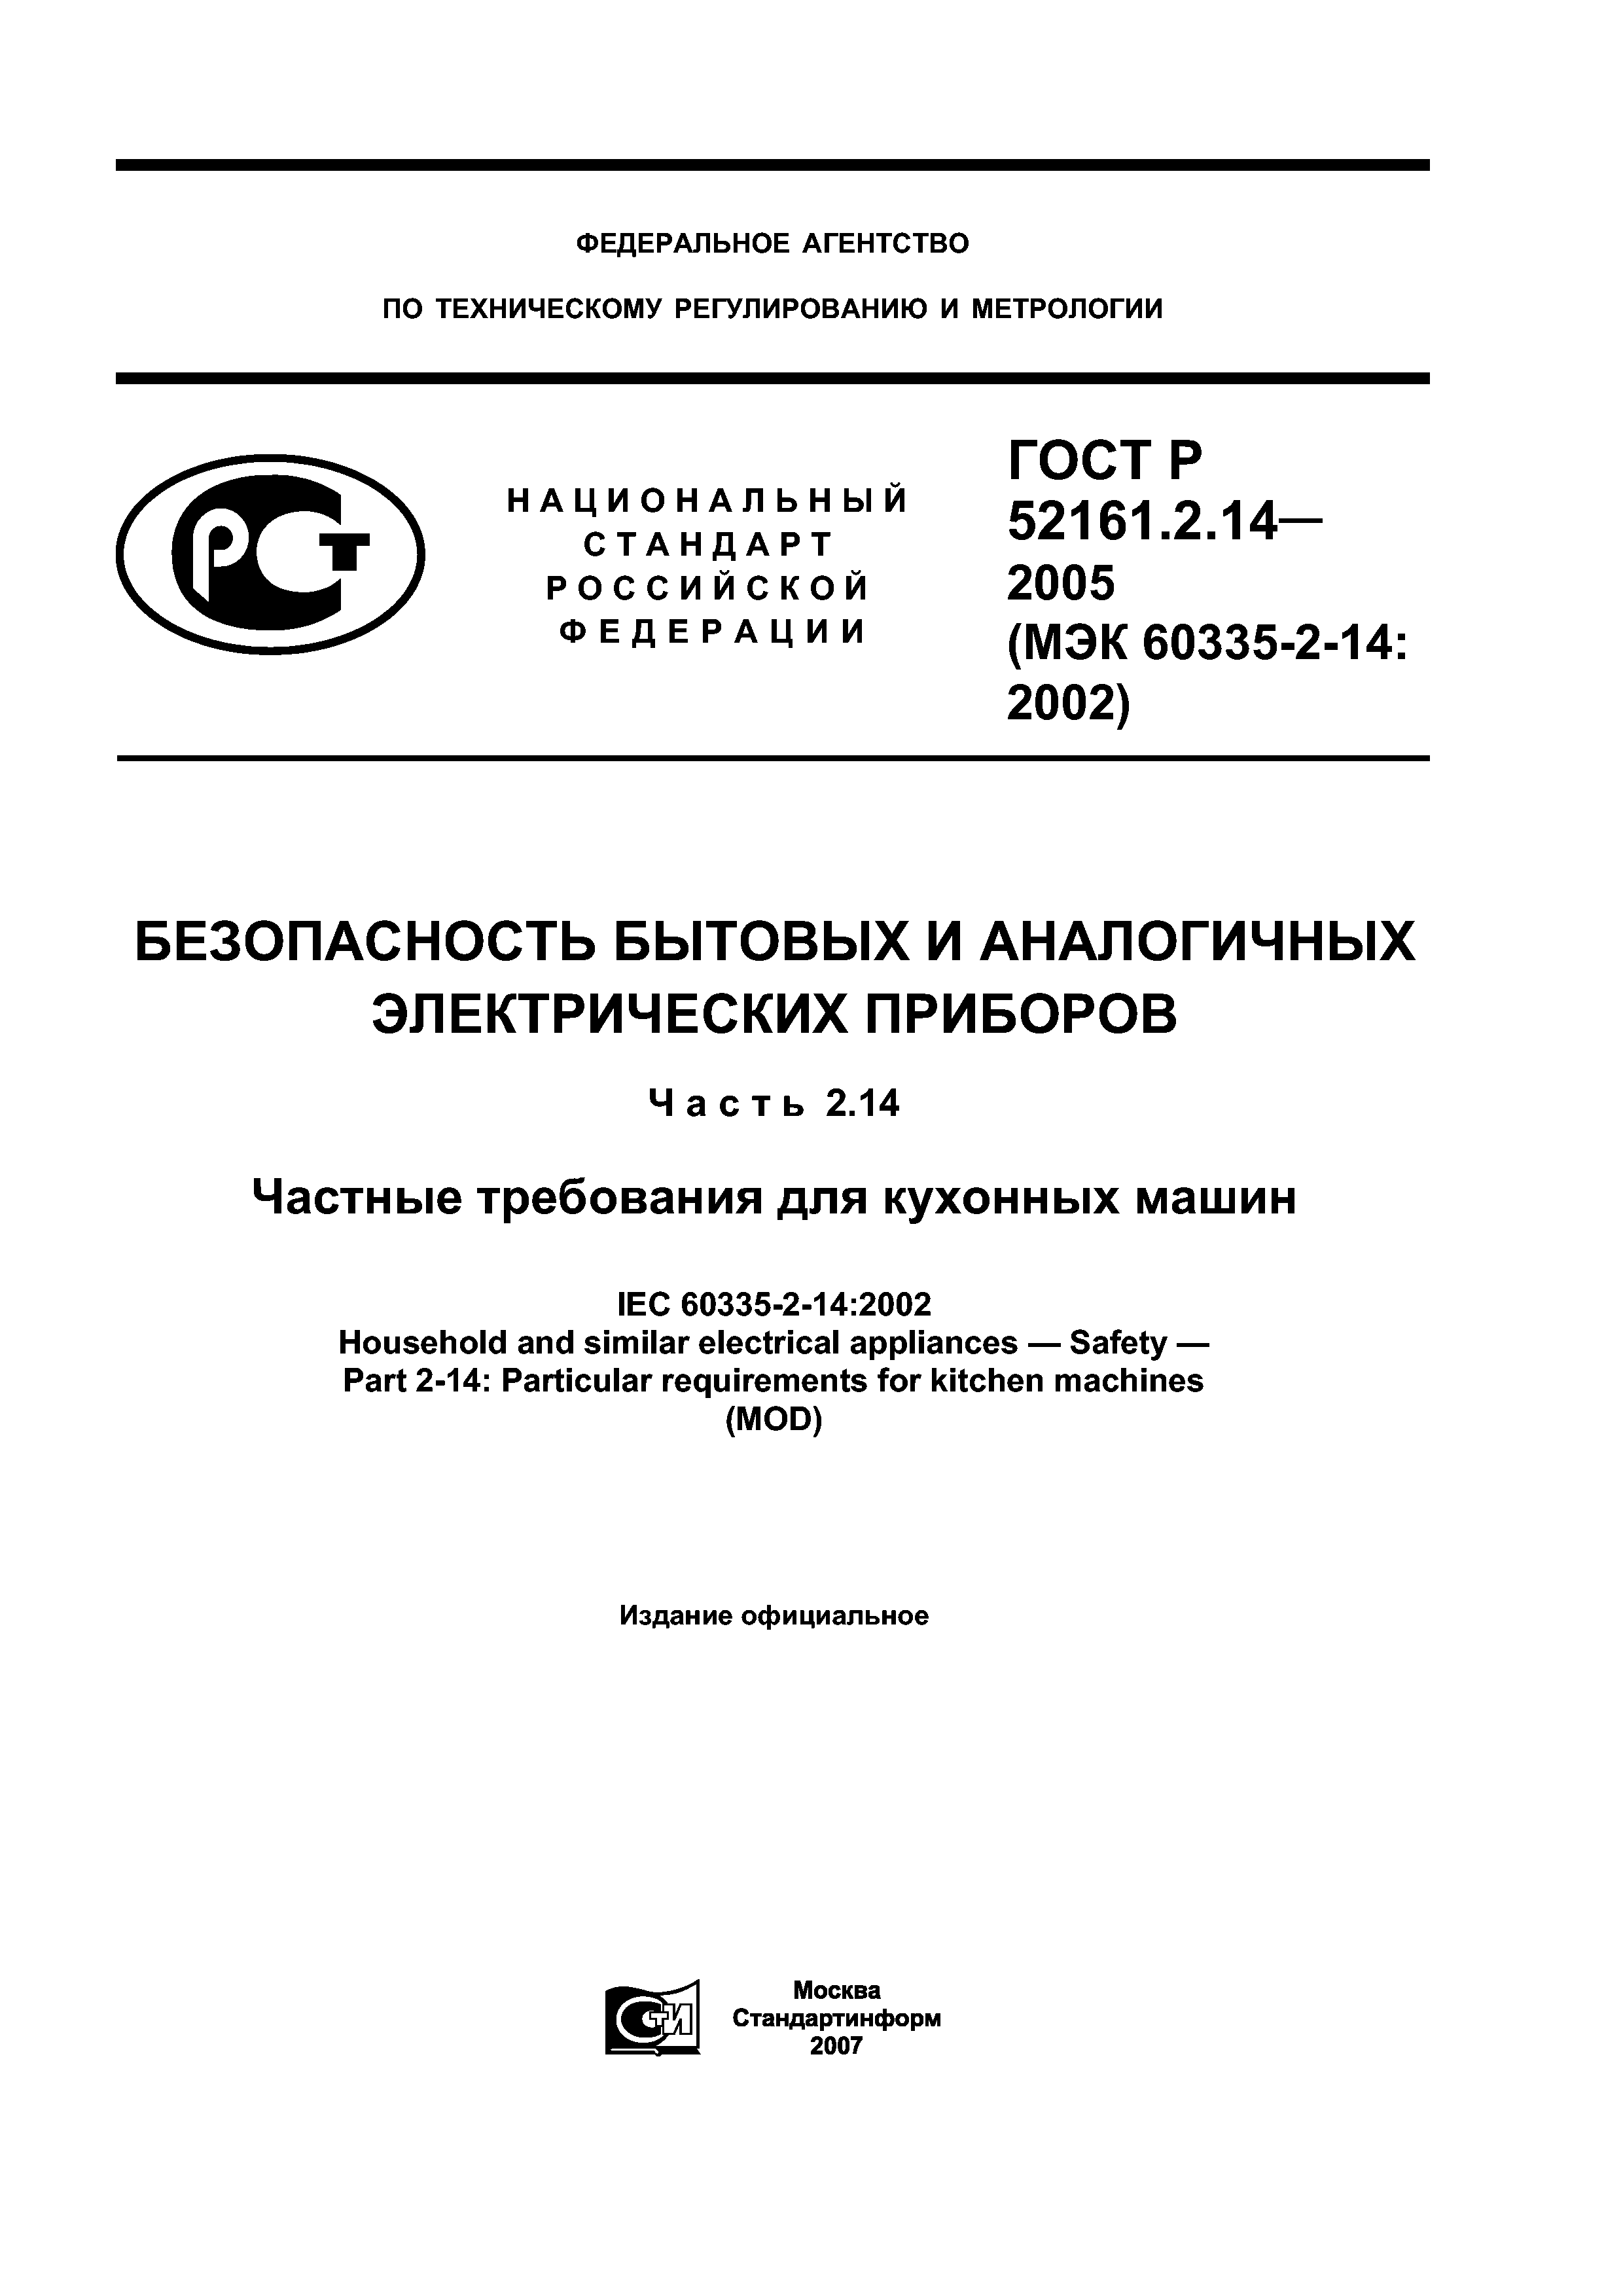 ГОСТ Р 52161.2.14-2005